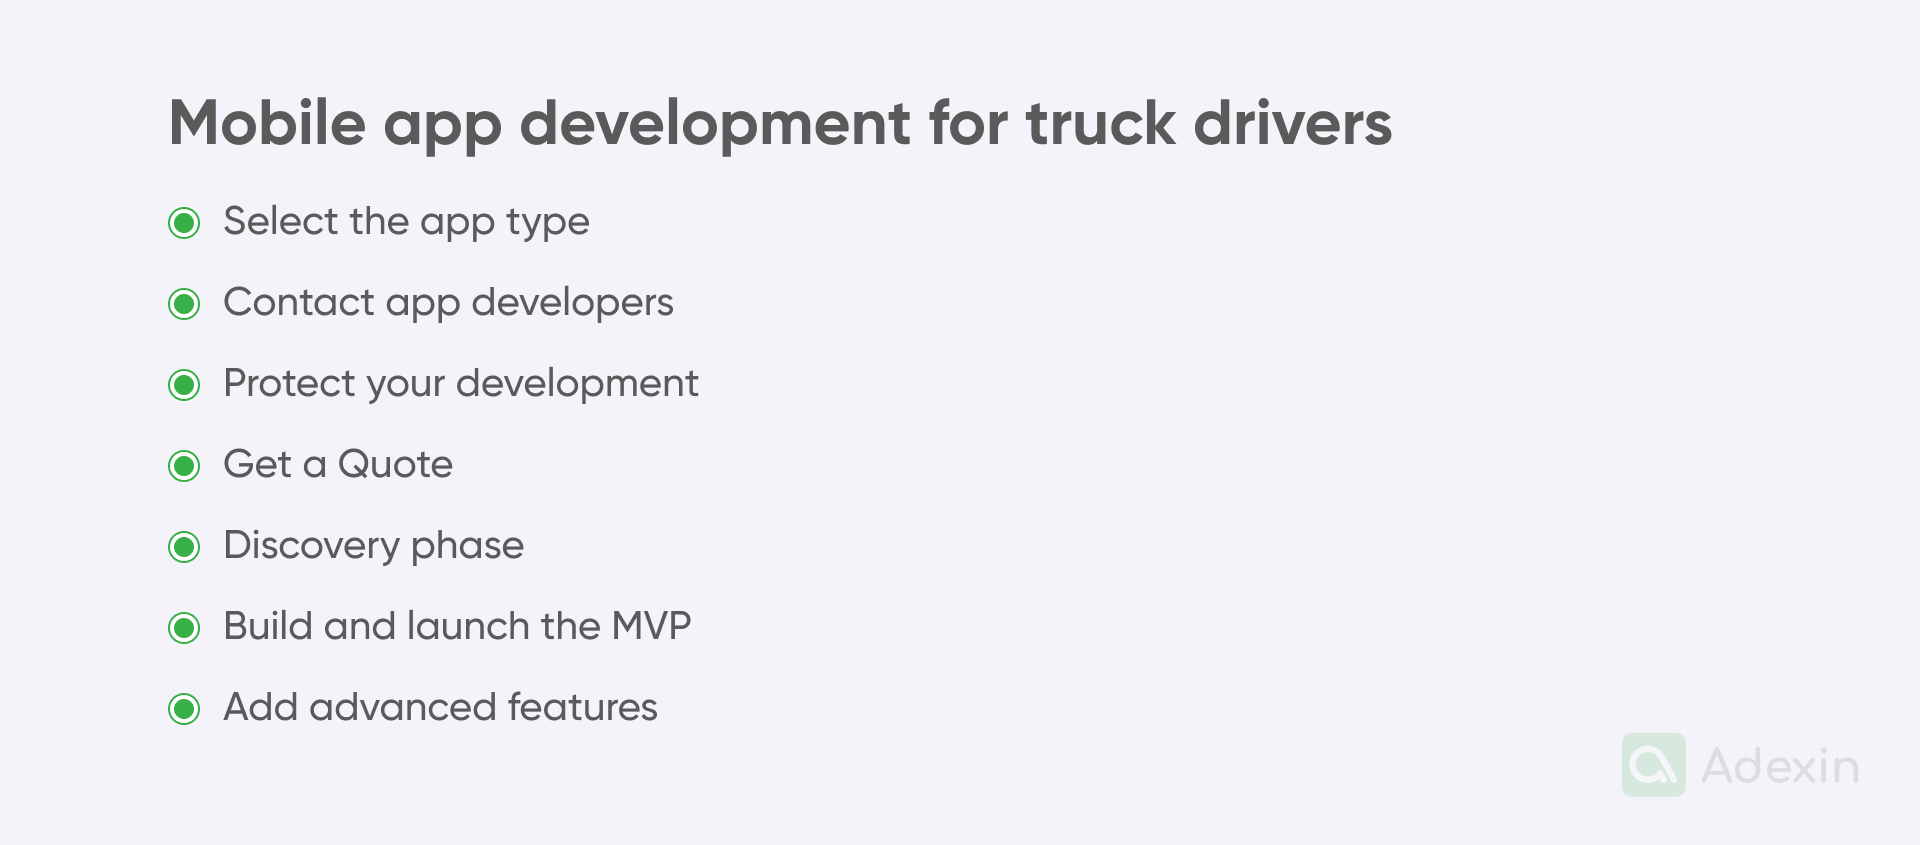 Steps of mobile app development for truck drivers